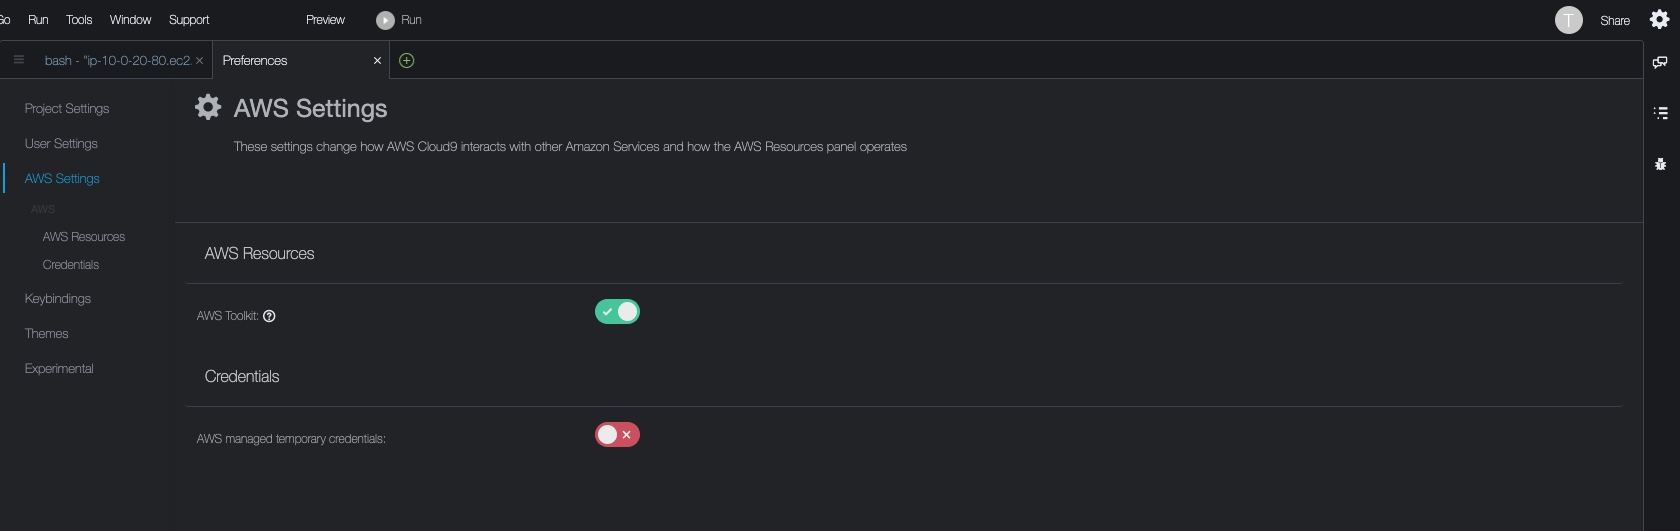 Cloud9 Screenshot: Preferences